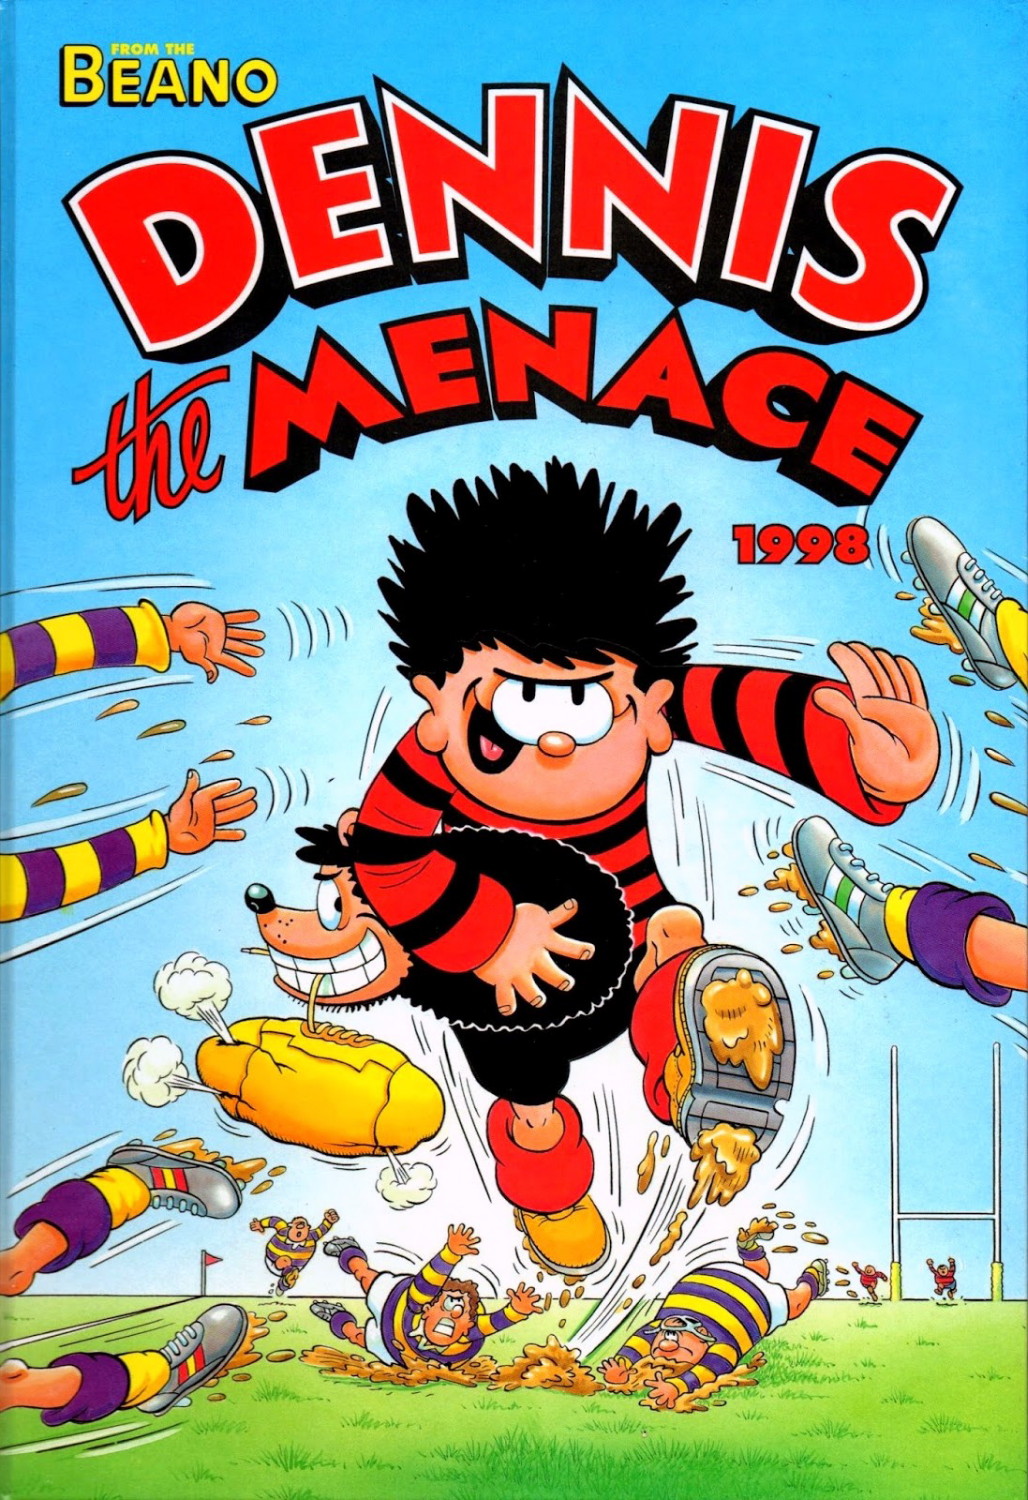 the comics Dennis menace